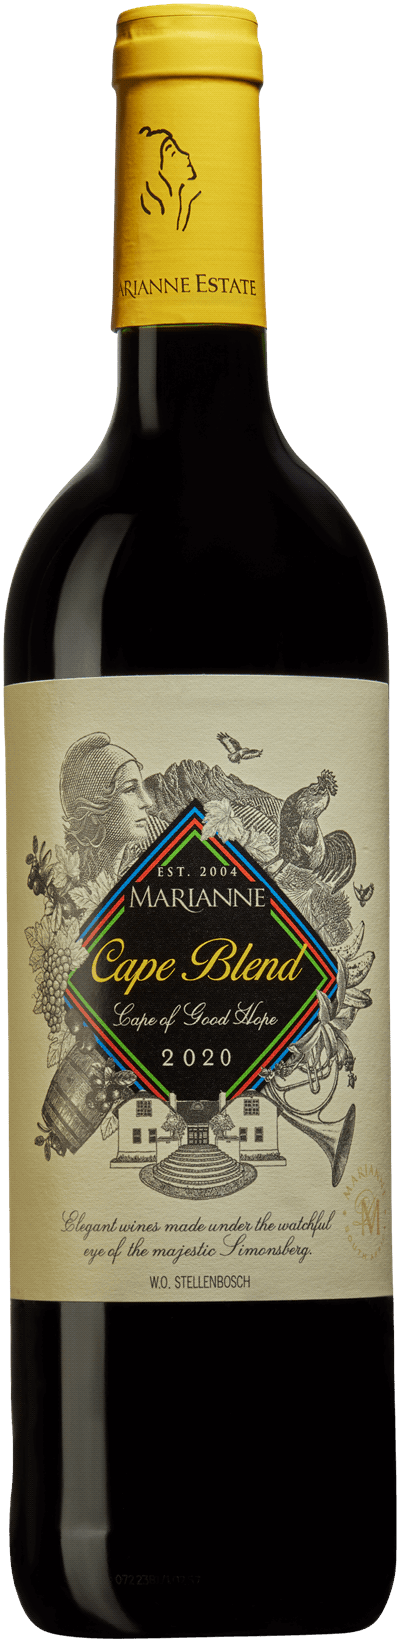 Marianne Cape Blend, 2020